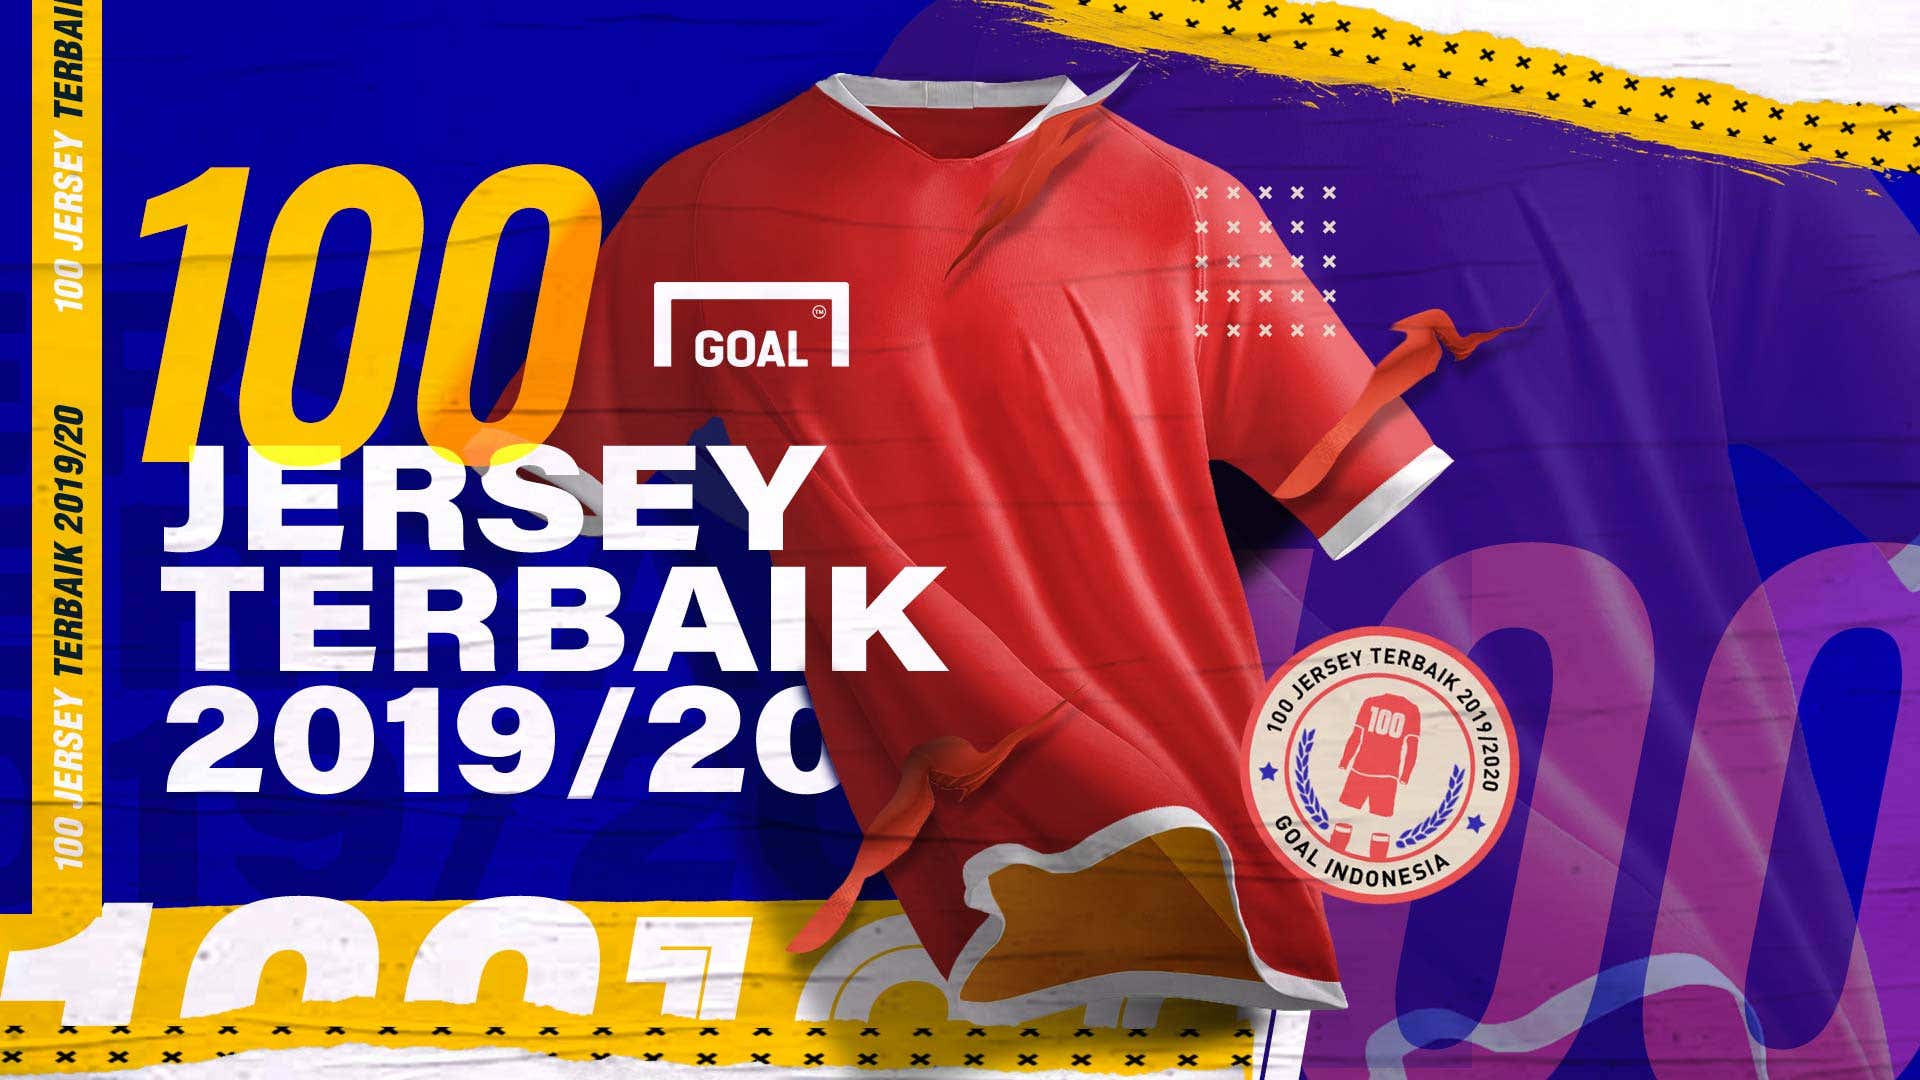 100 Jersey terbaik 2019/20